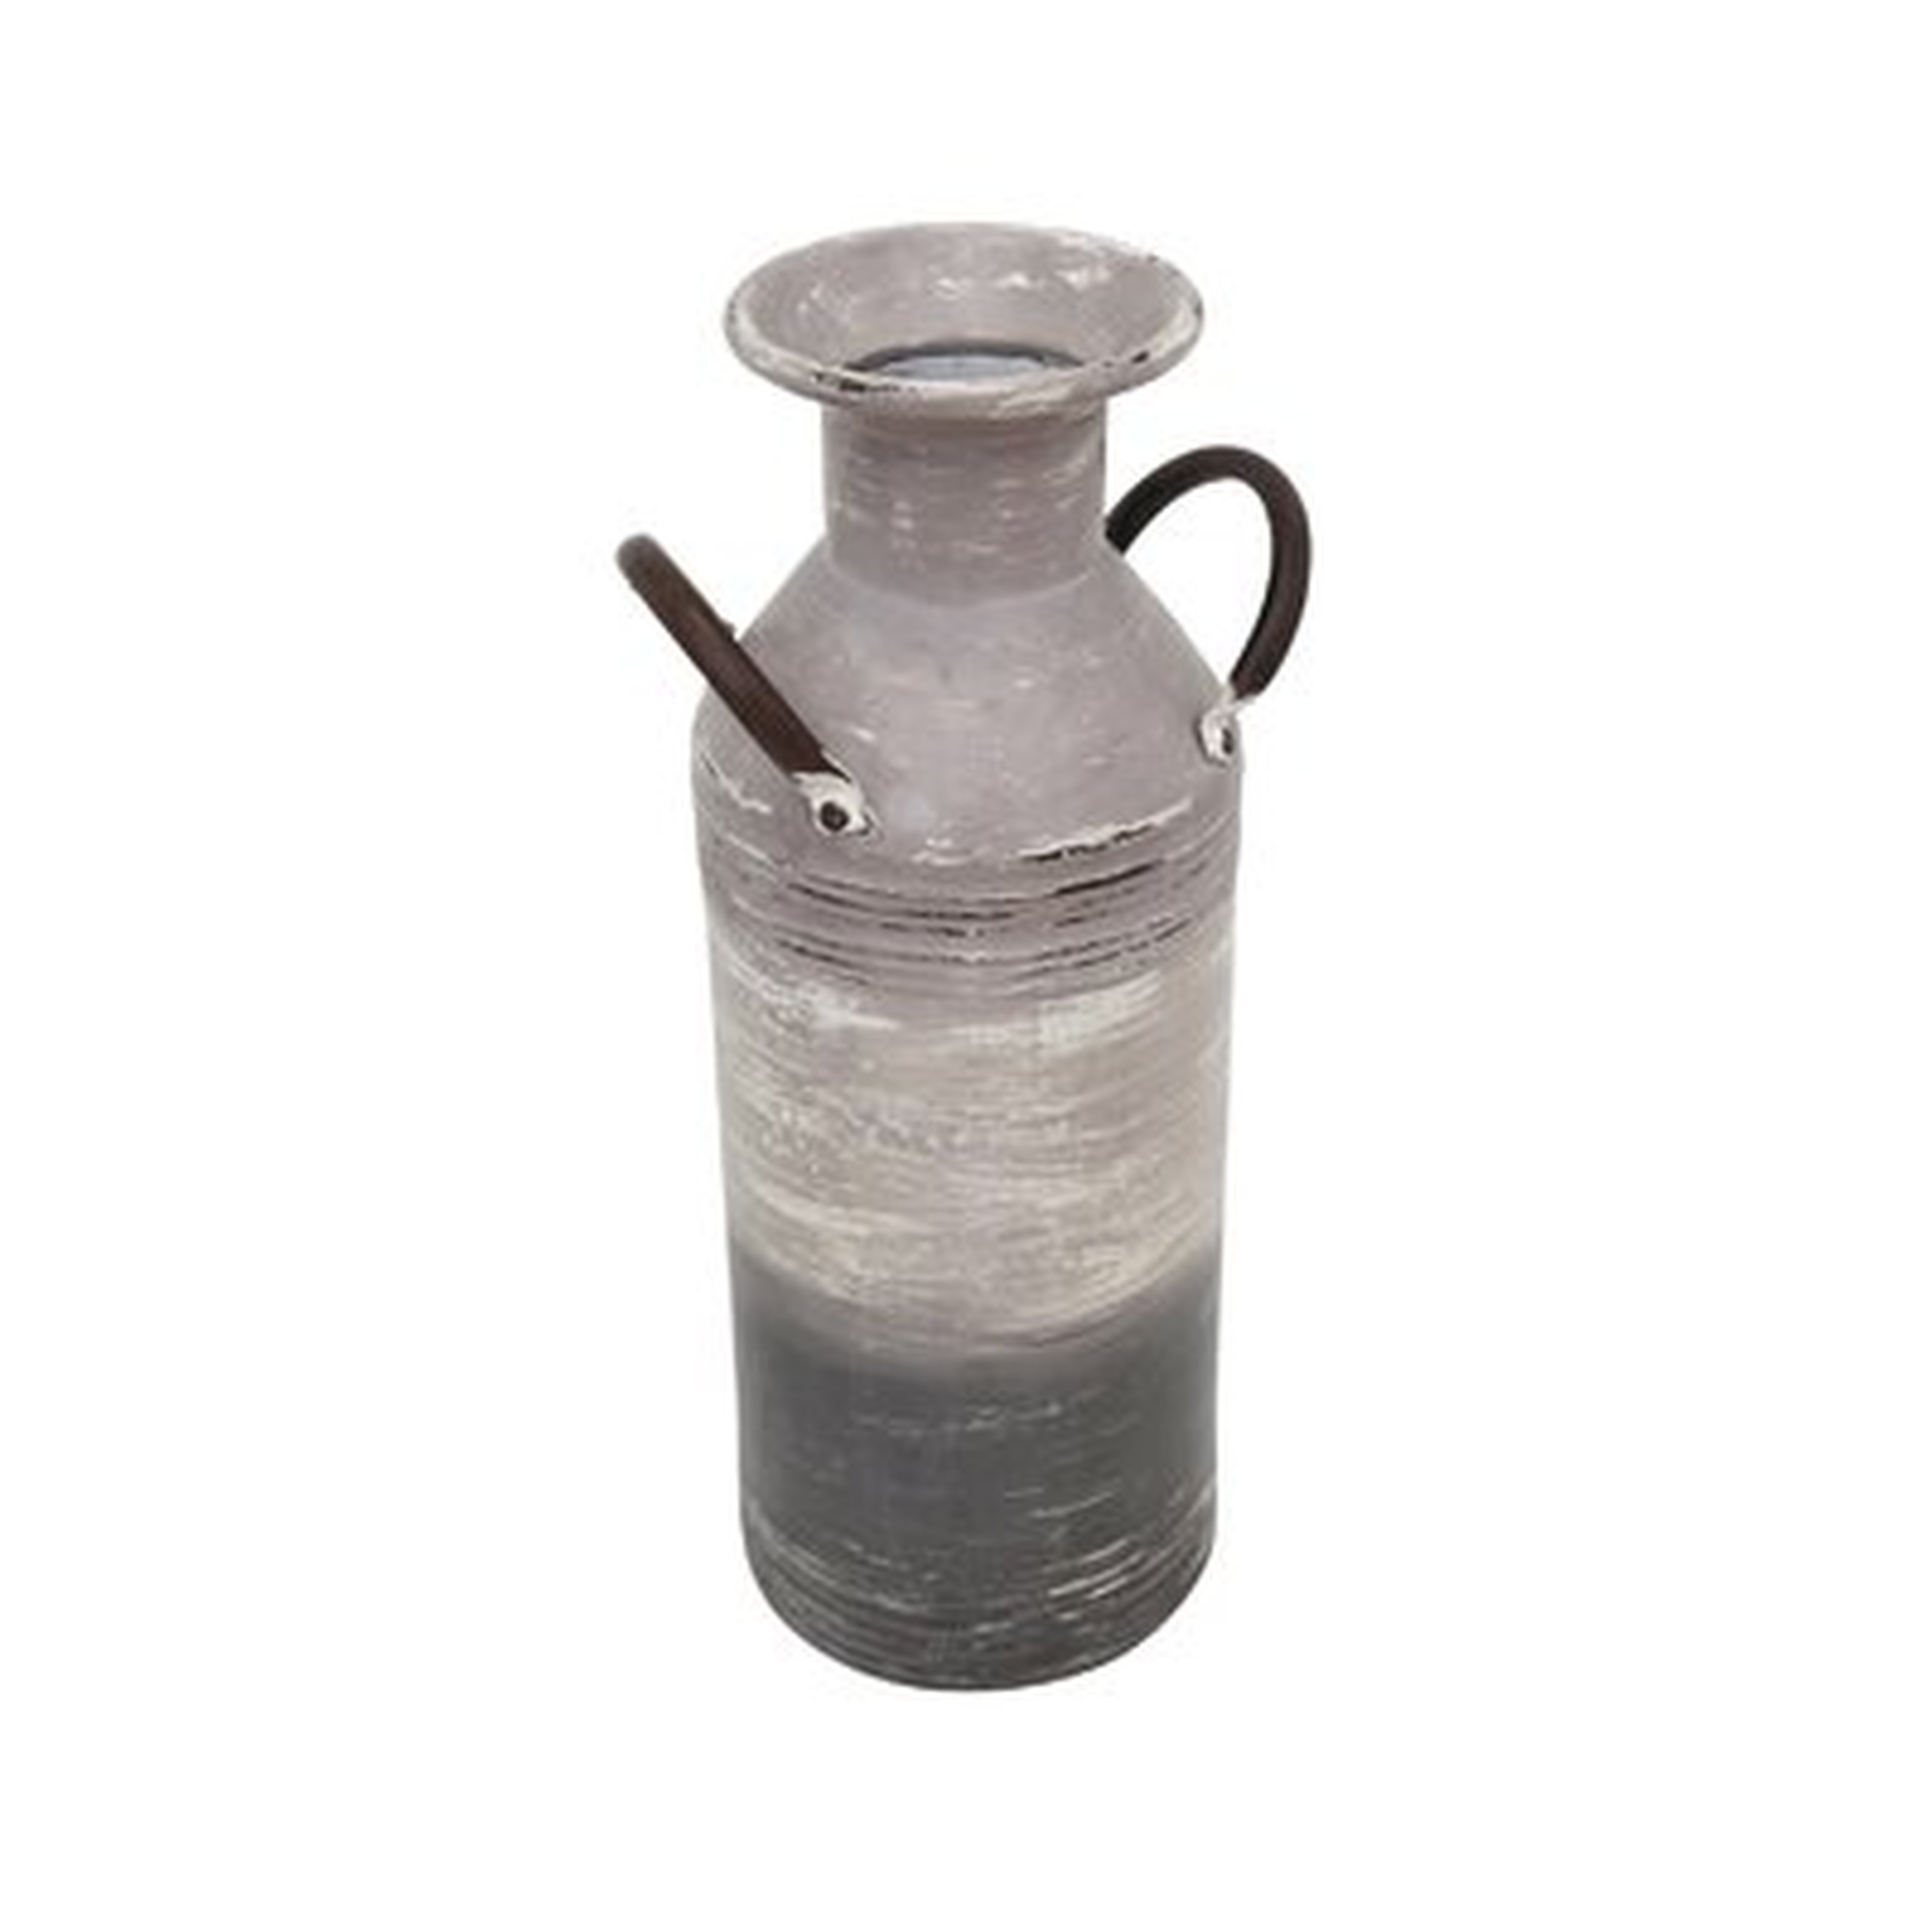 Loughman Metal Milk Can Table Vase - Wayfair